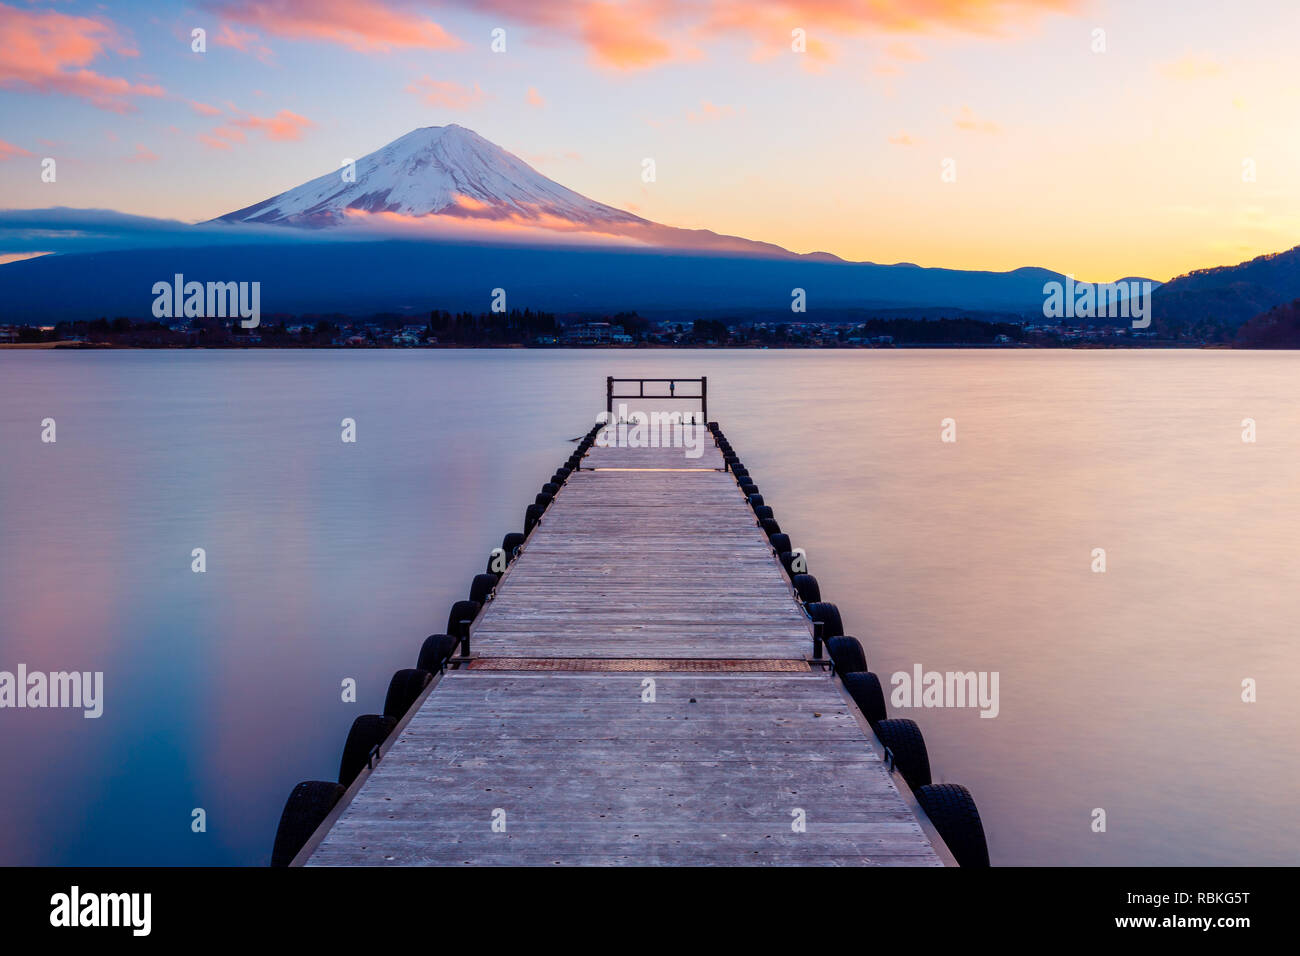 Mt. Fuji with a leading dock in Lake Kawaguchi, Japan Stock Photo